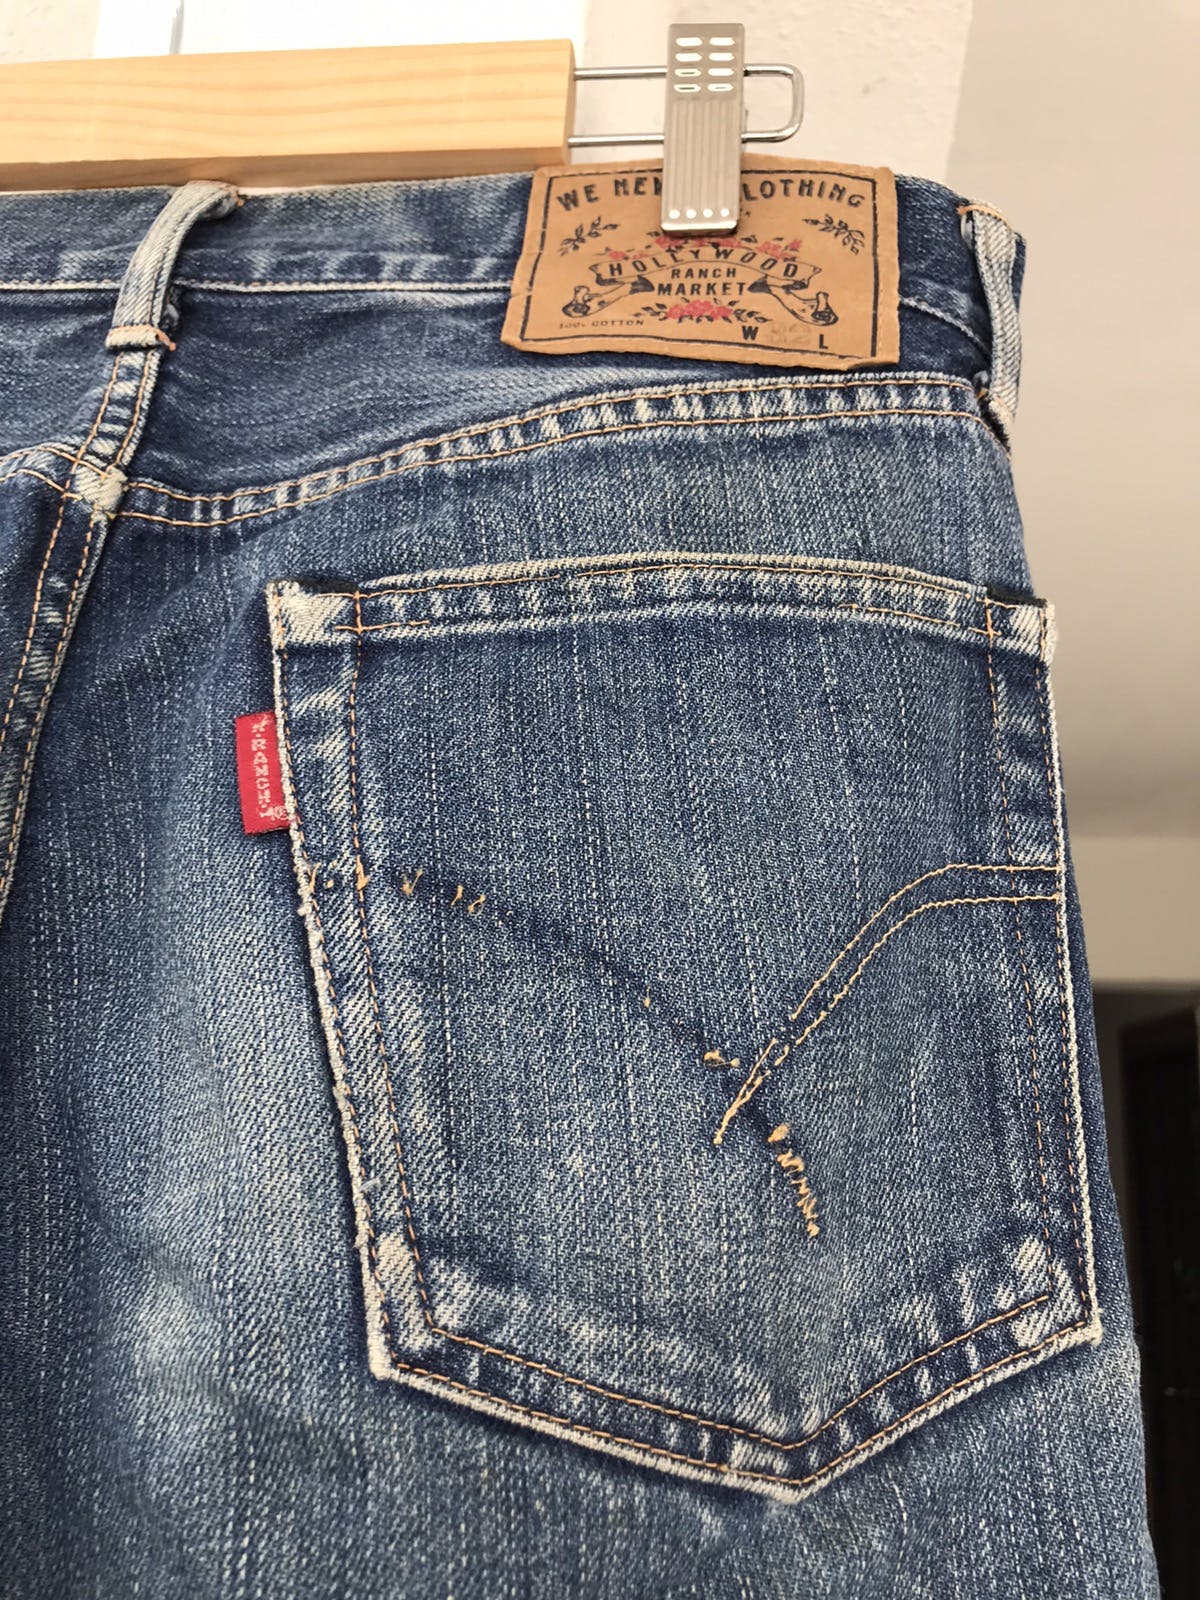 90s Hollywood Ranch Marrket Denim Jeans - 11